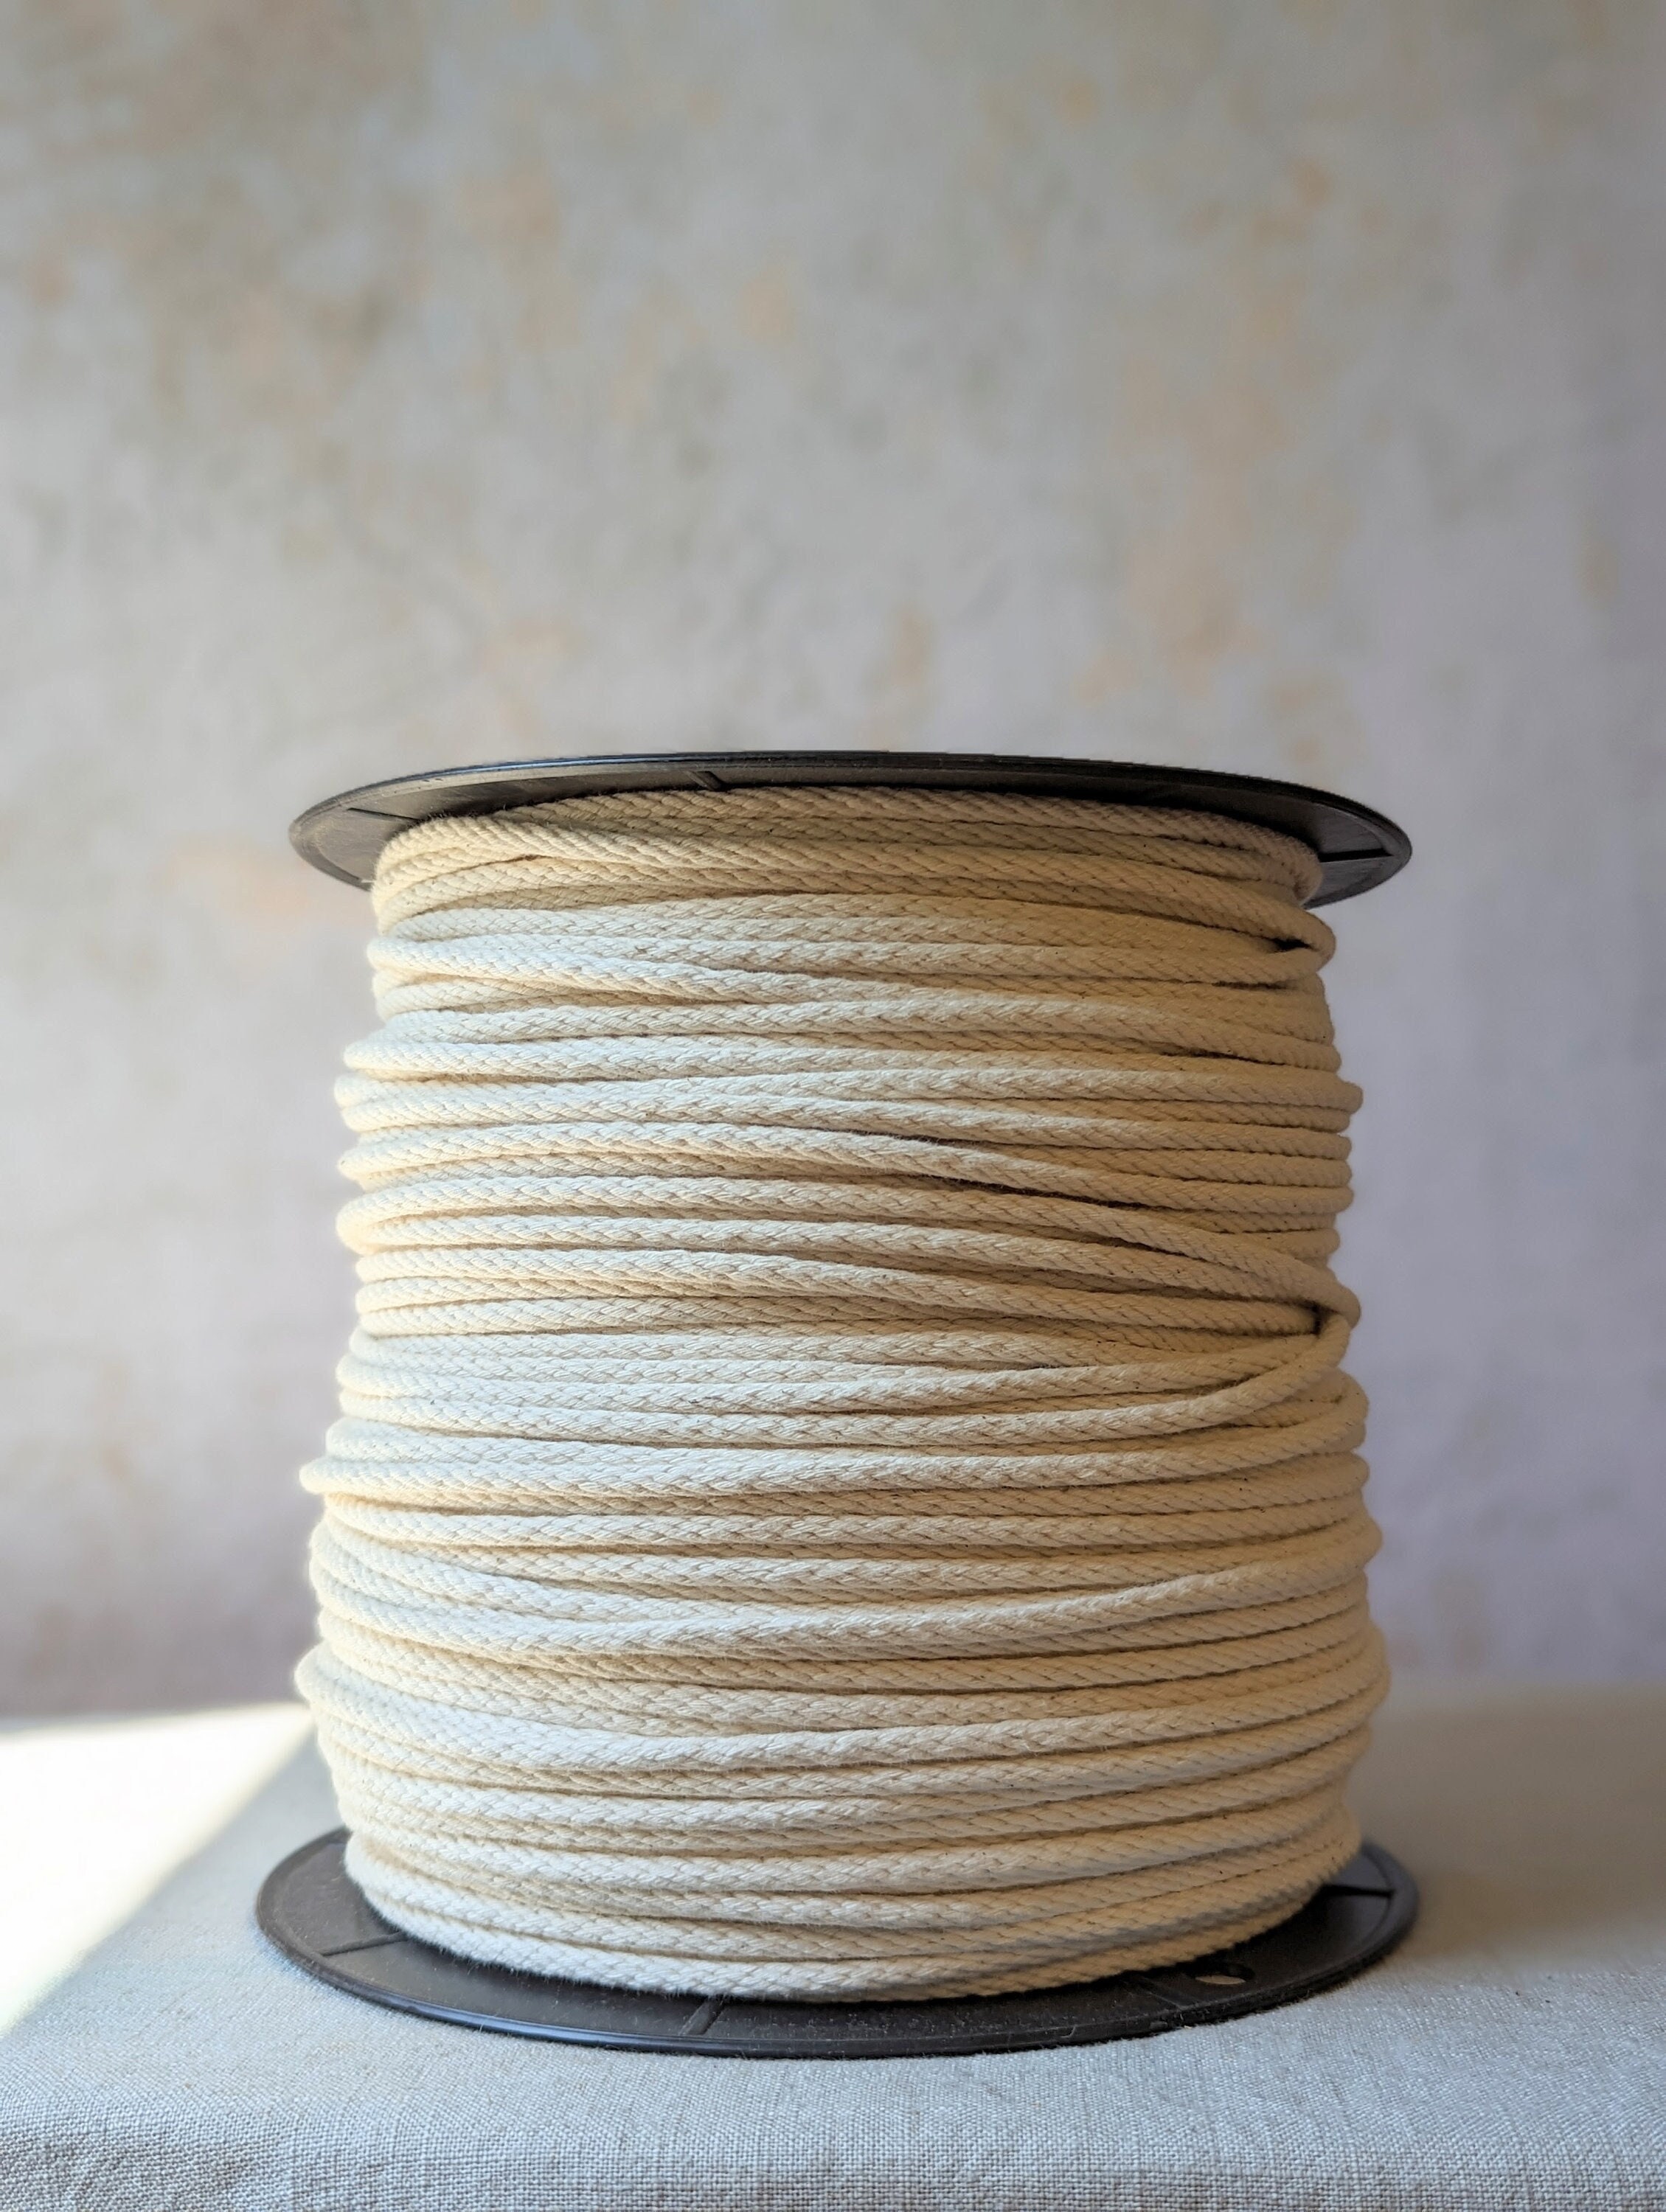 75 Feet 7/32 100% Braided Cotton Rope